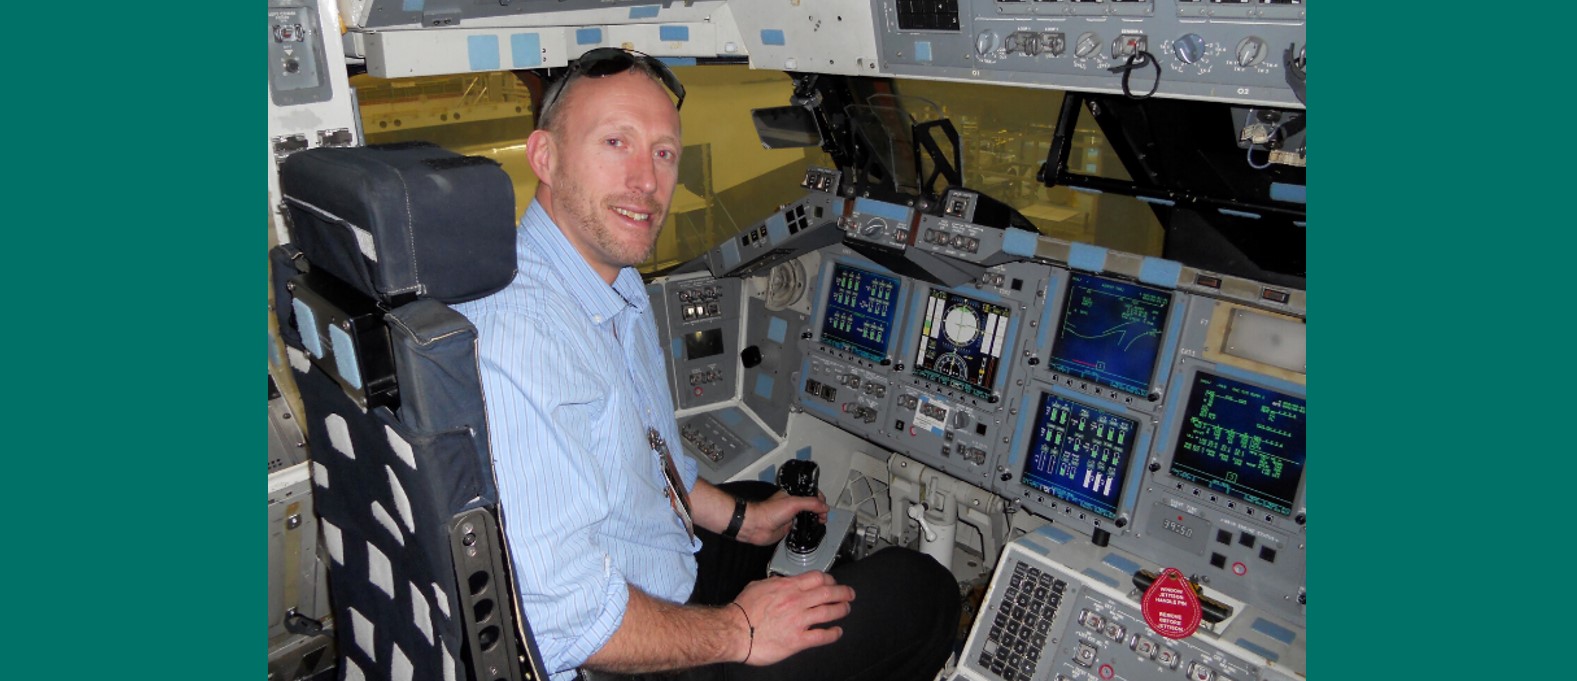 Professor Chris Johnson, Faculty PVC in EPS at NASA controls 